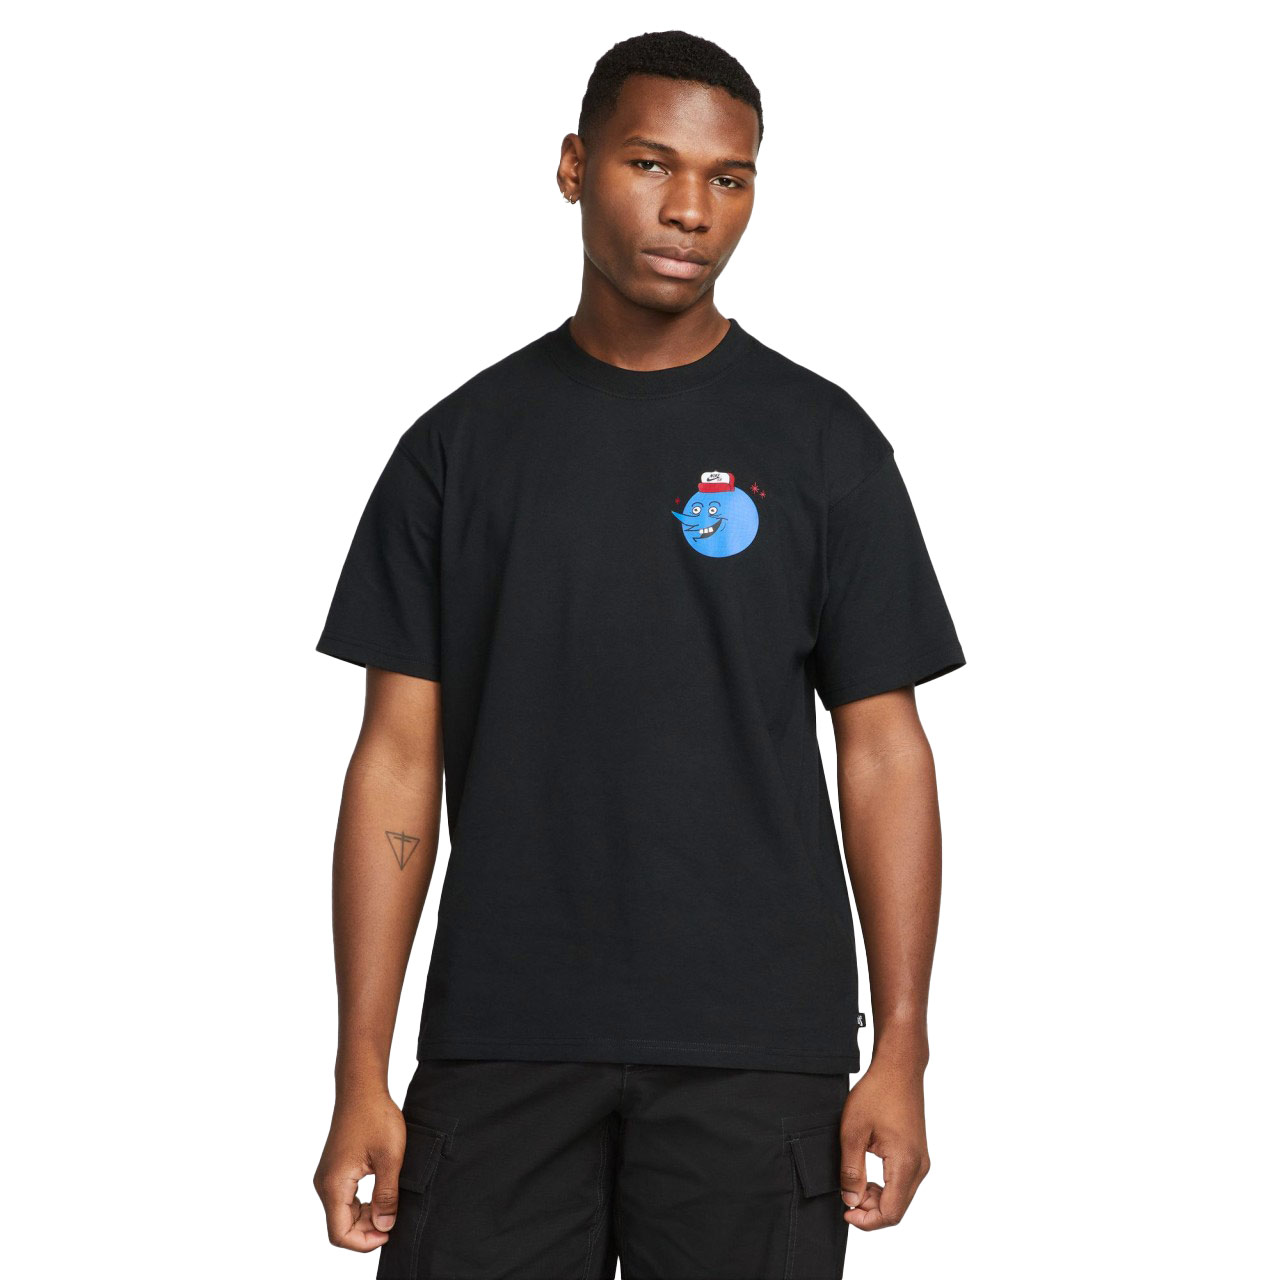 Nike SB Men's Skate T-Shirt Just Be Here Black